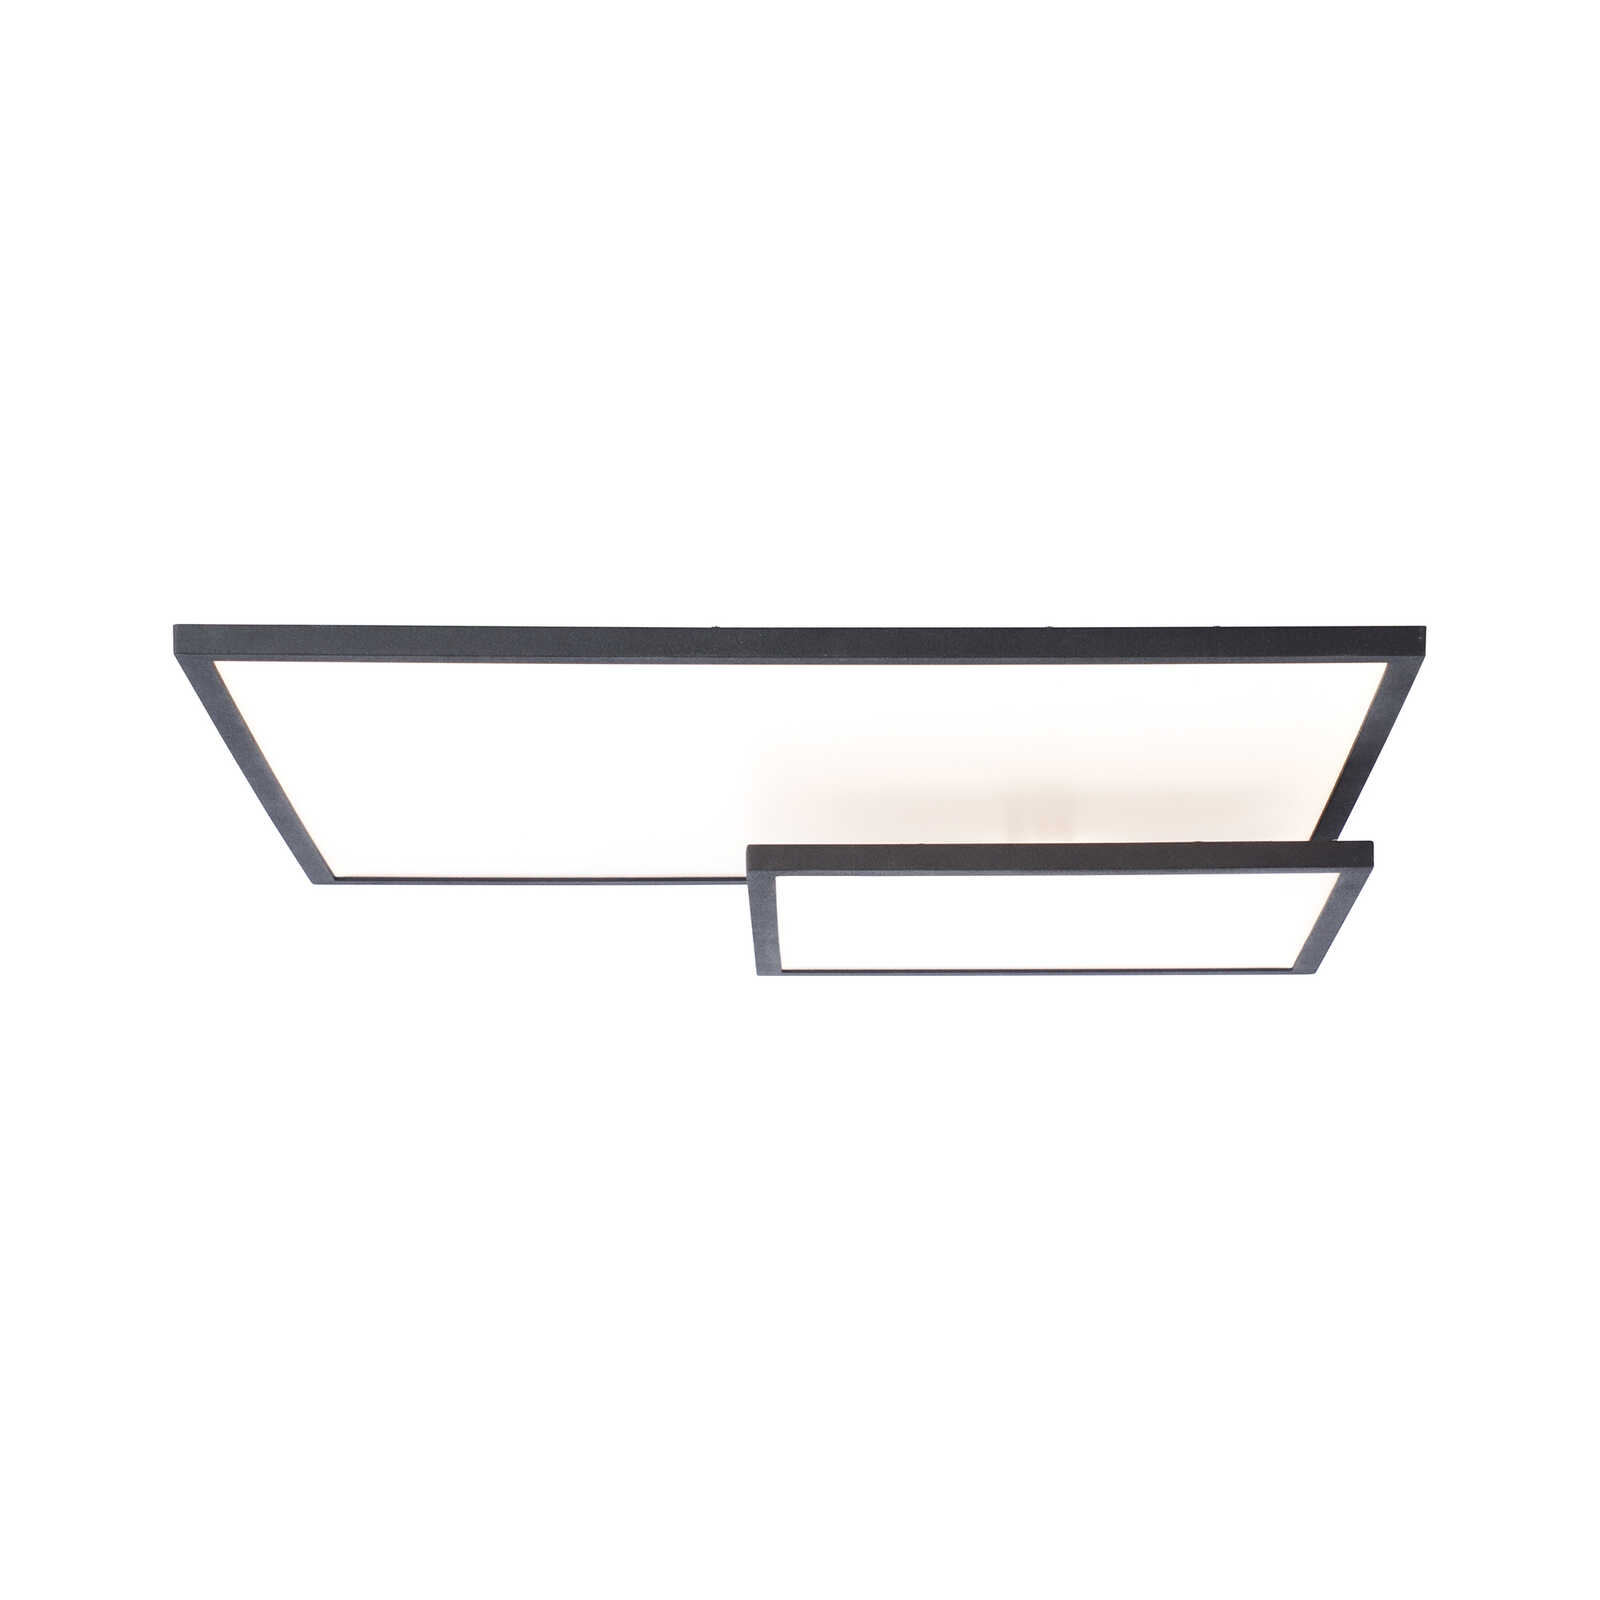 Metalen plafondlamp - Benno 1 - Zwart
